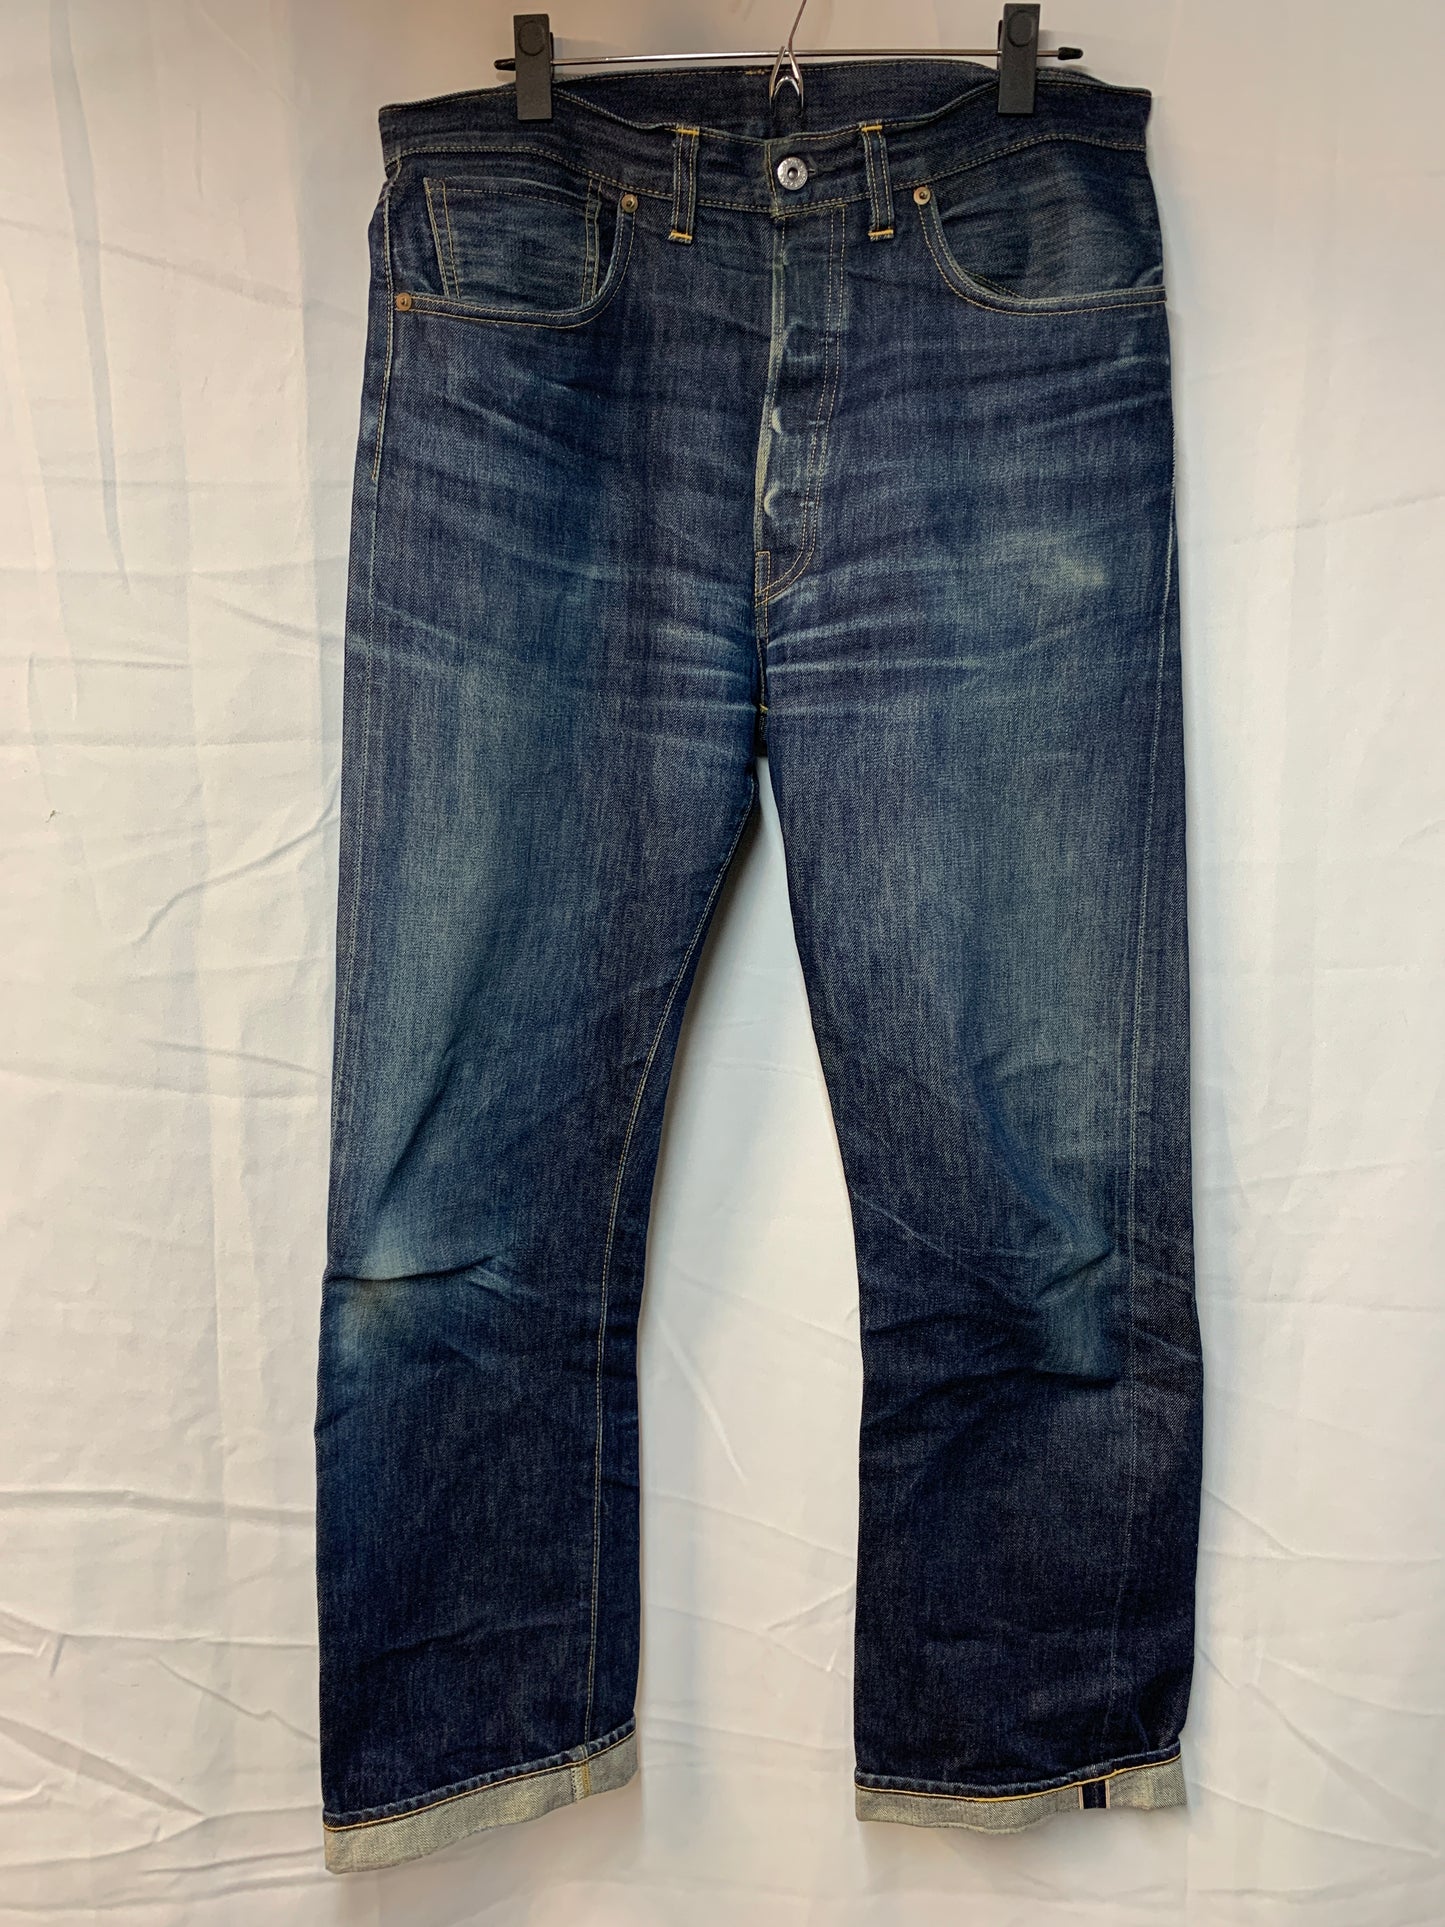 LVC - Denim Jeans model 1944 - 34x34 (35x32)